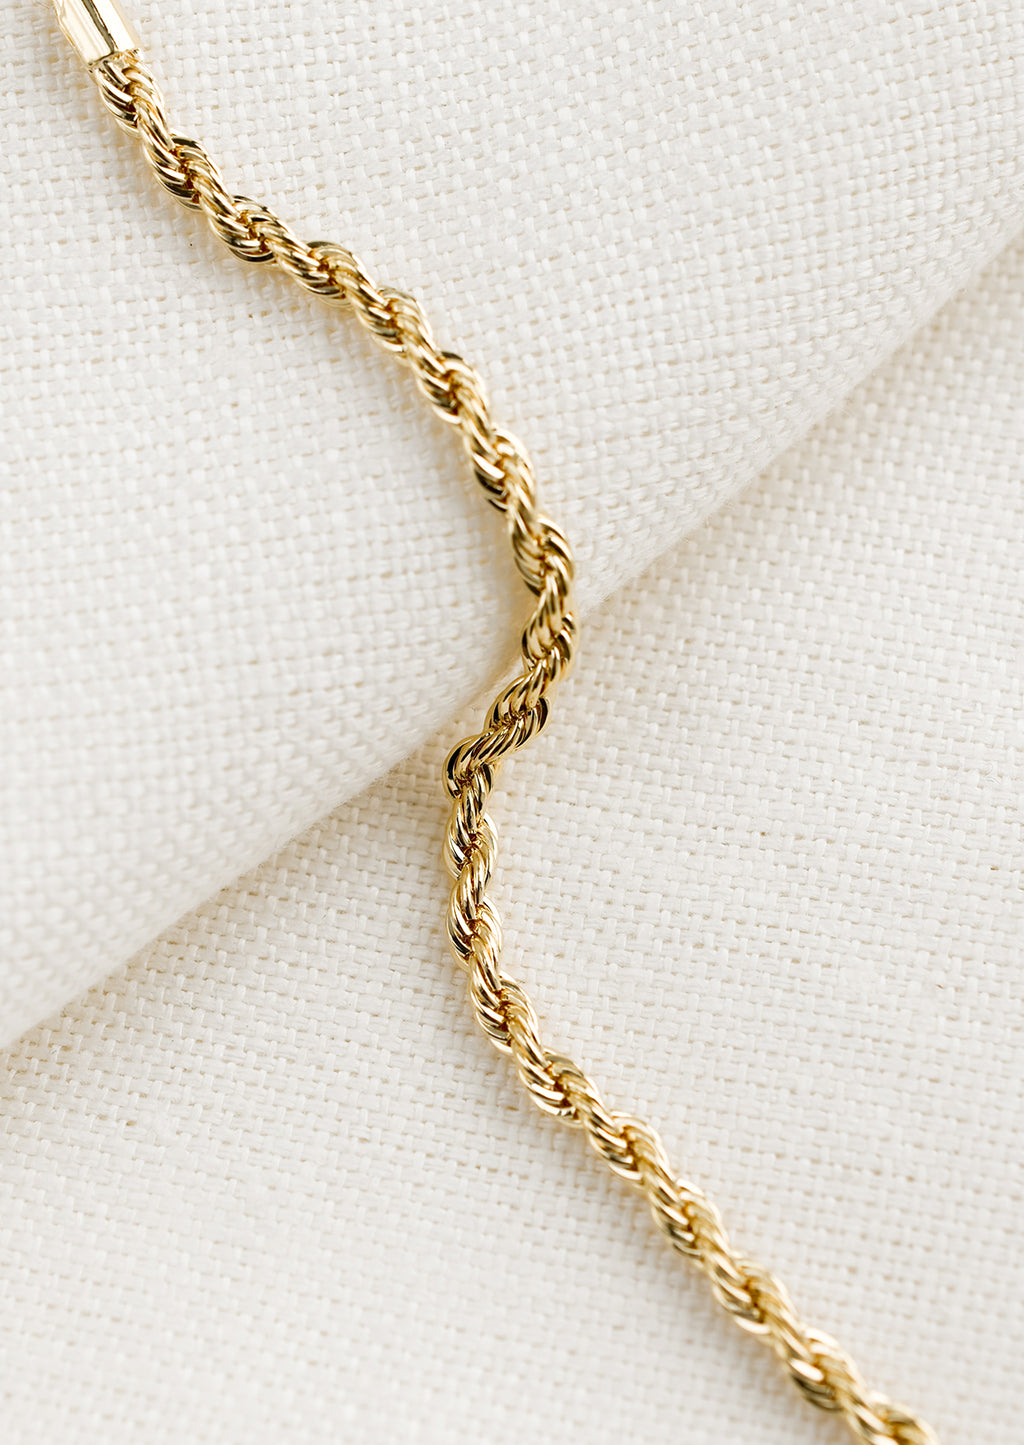 2: A gold bracelet in rope twist design.